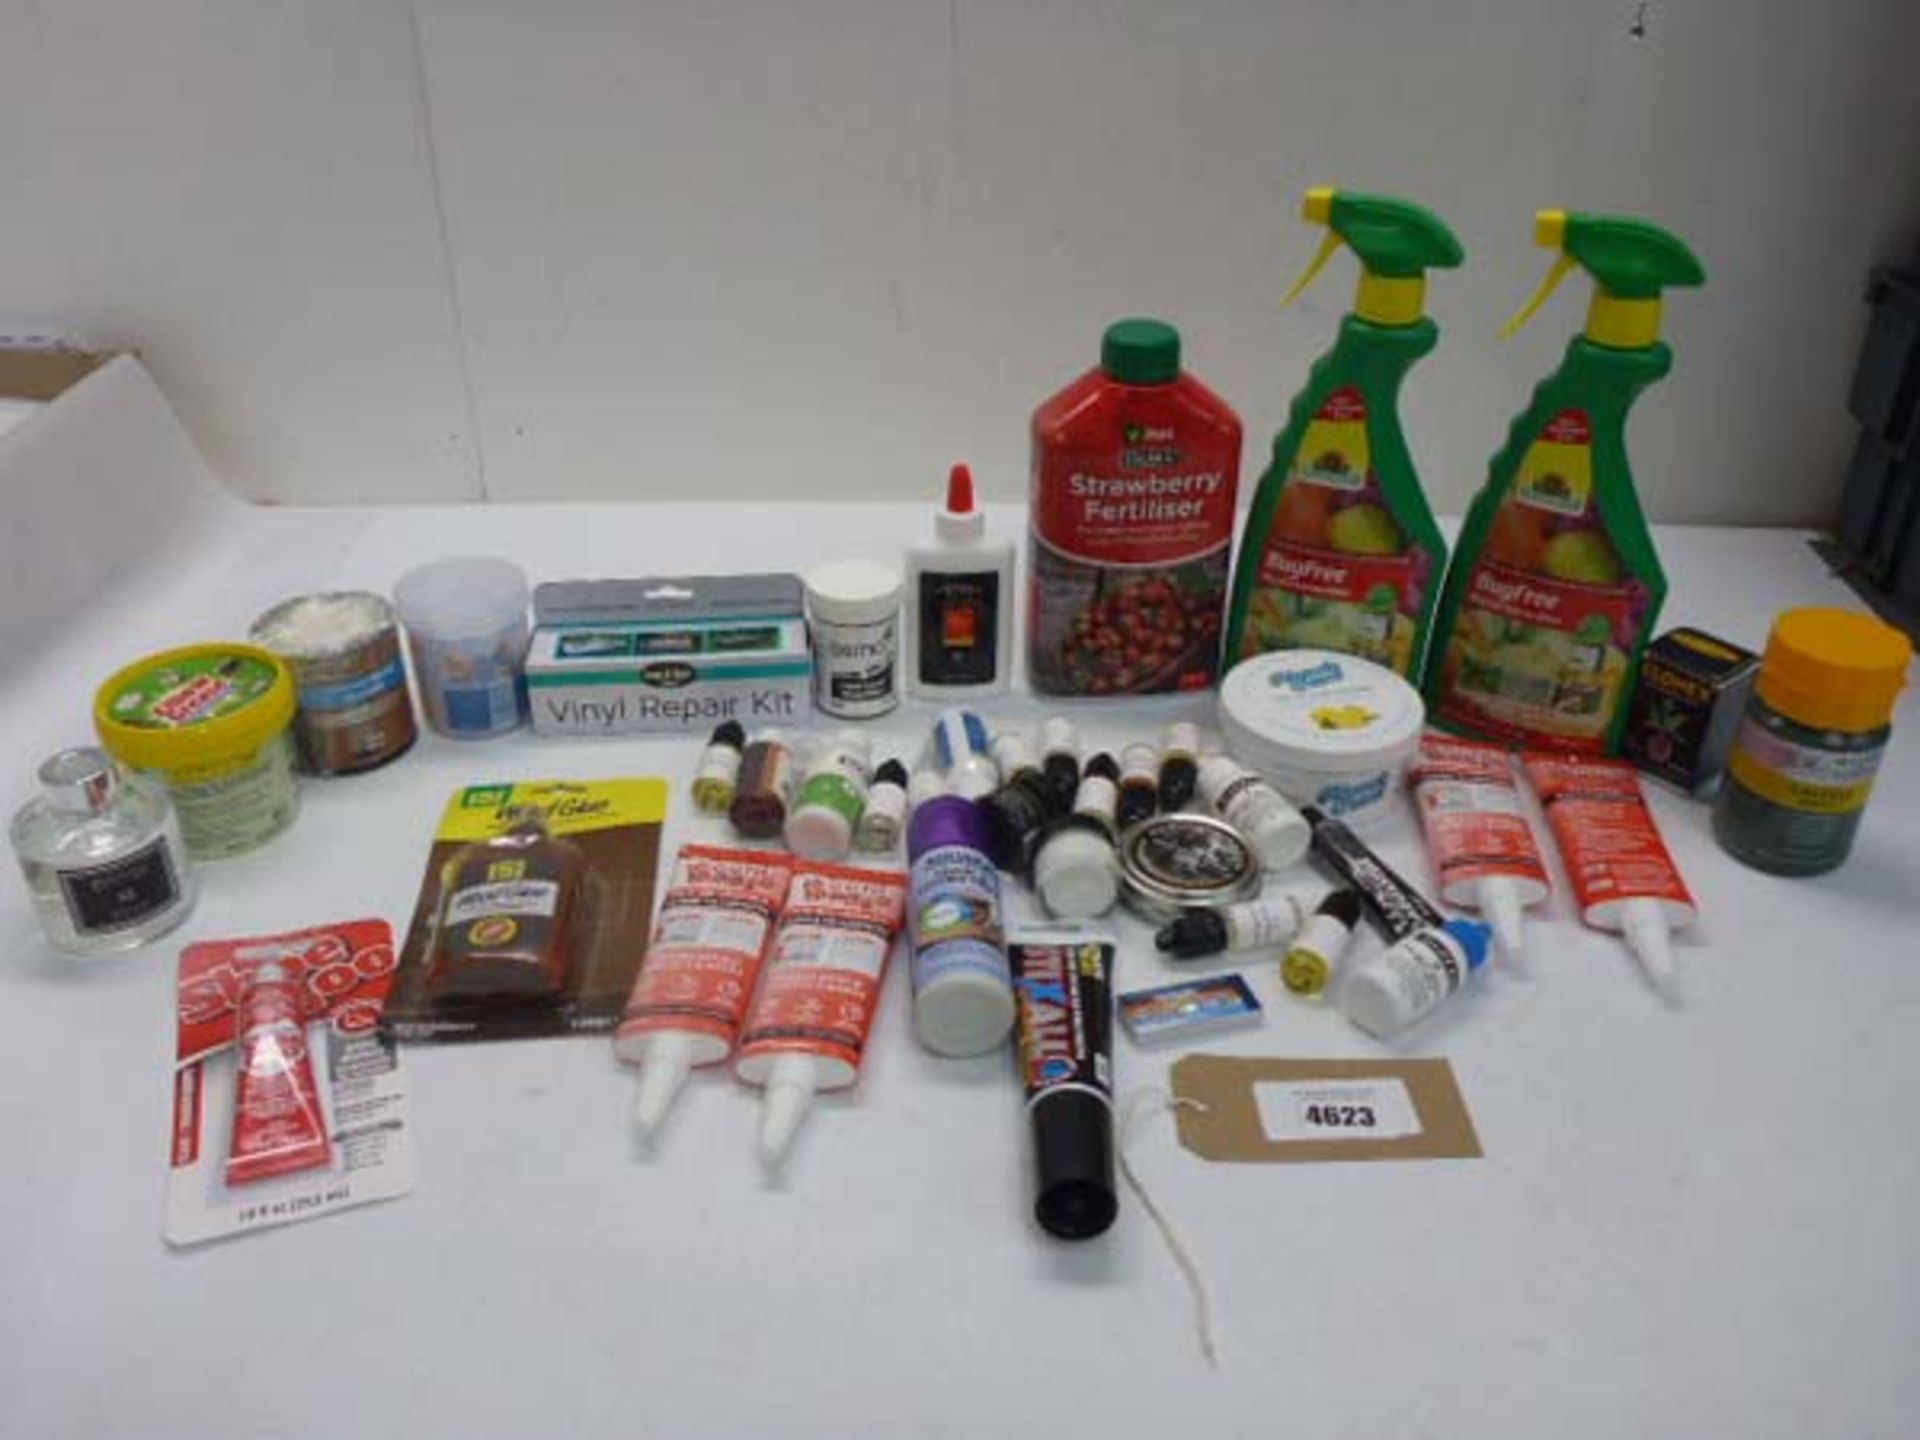 Bug Free spray, plant feed, Vinyl repair kit, wood glue, acrylic paint, fragrance oils, wood varnish